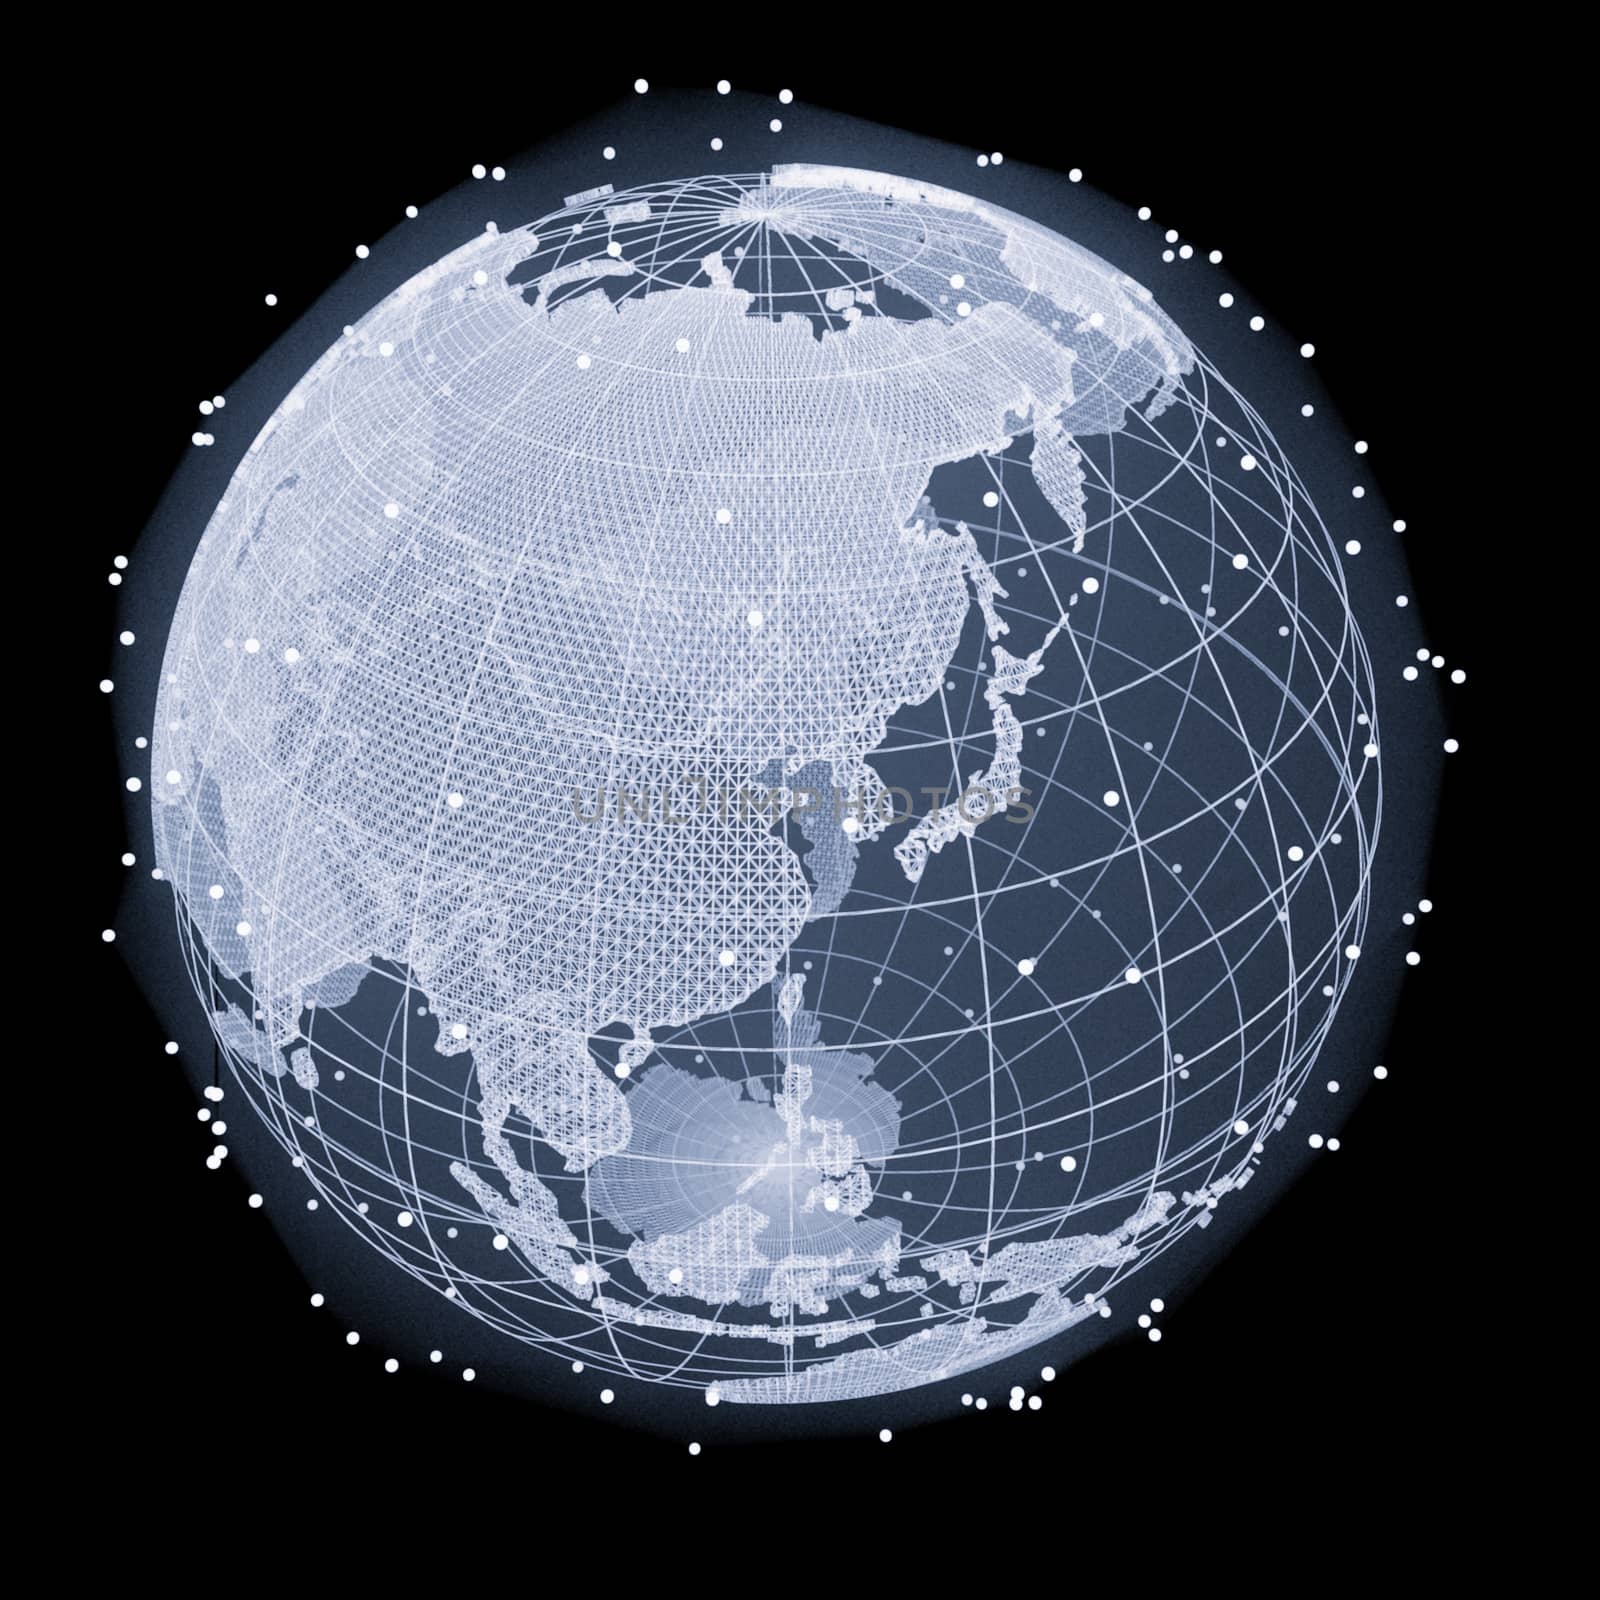 Abstract Telecommunication Earth Map by cherezoff